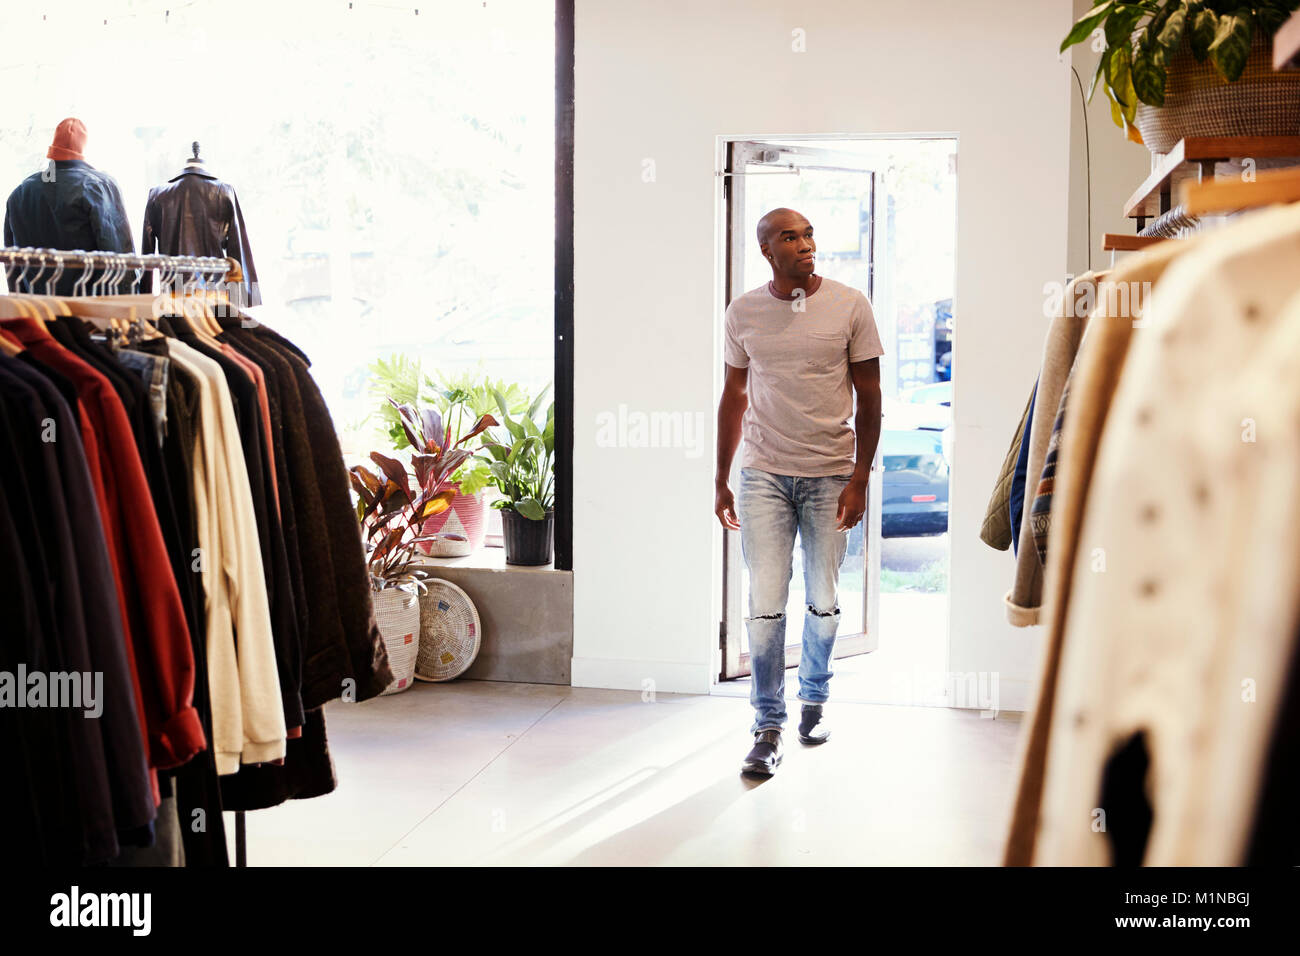 Young black man walking into a clothes shop Stock Photo